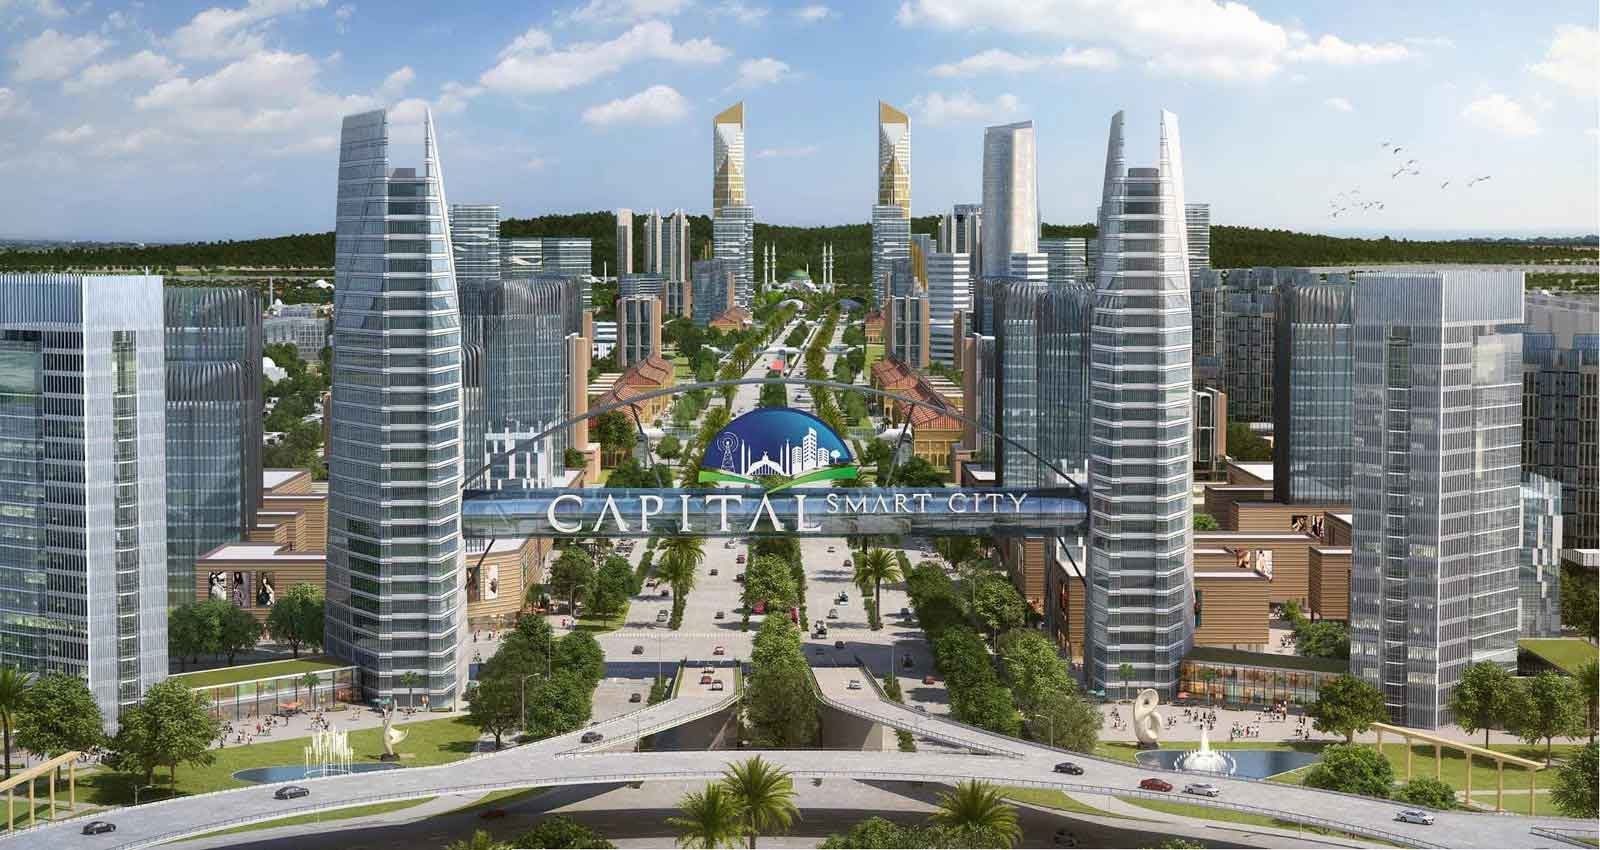 Capital smart city